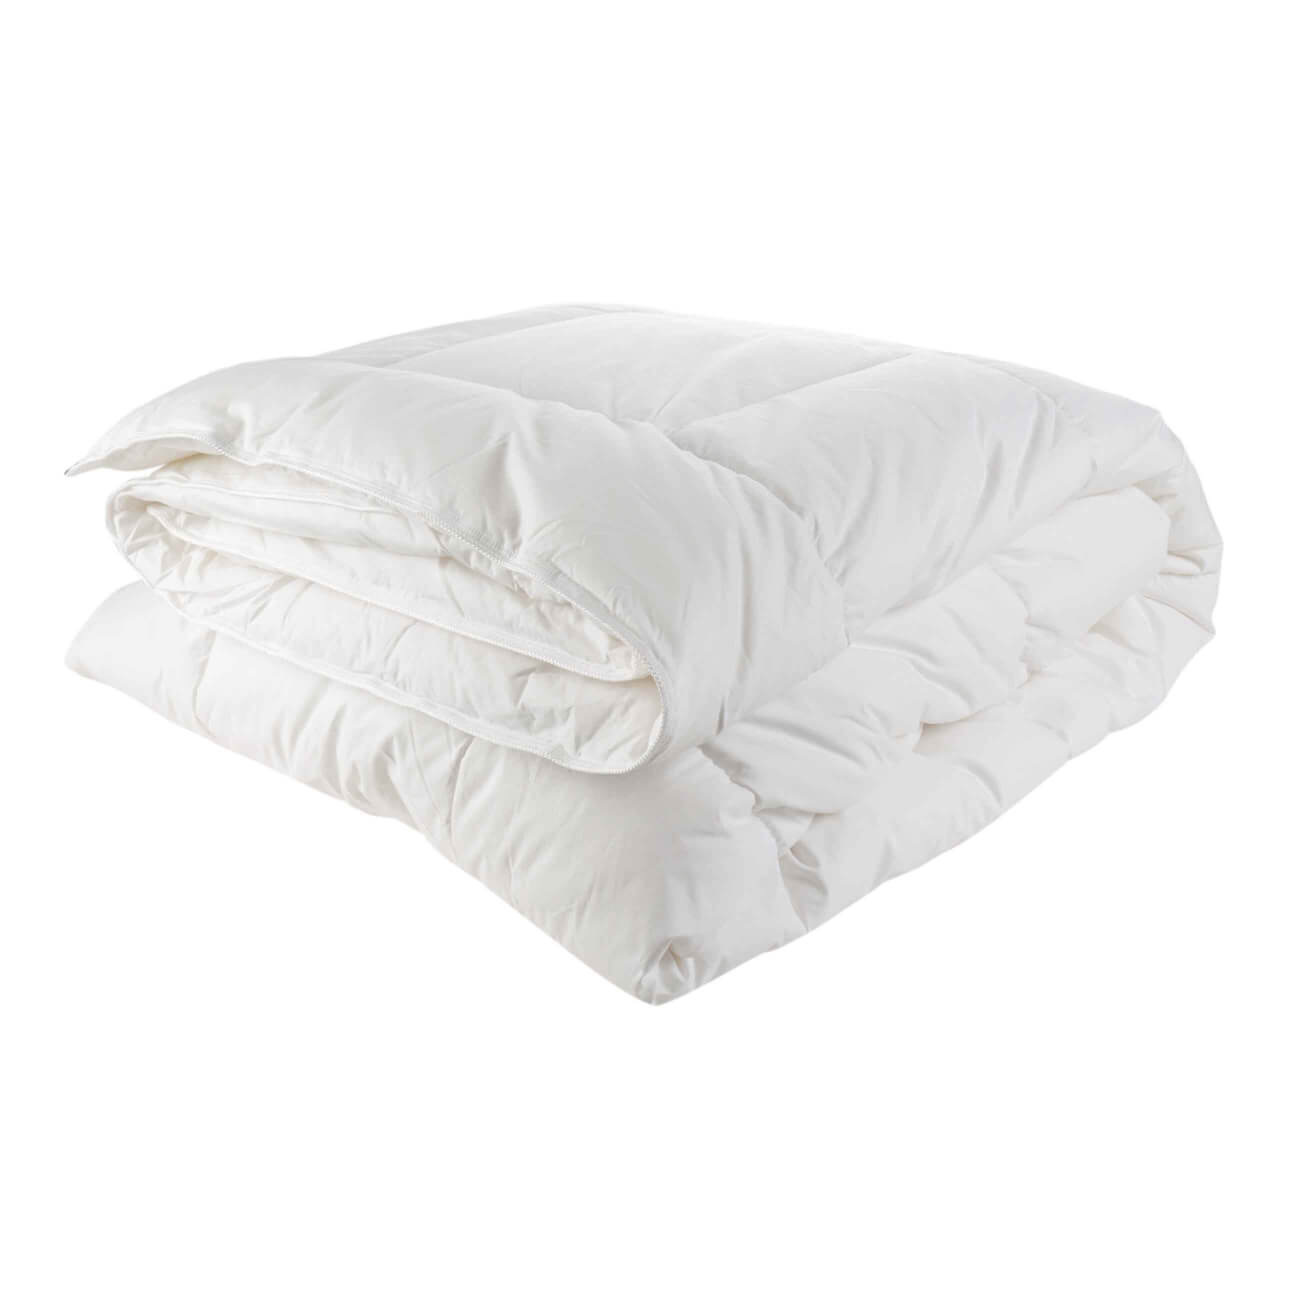 Одеяло, 140х200 см, хлопок/микрофибра, Soft cotton одеяло 140х200 см микрофибра super soft